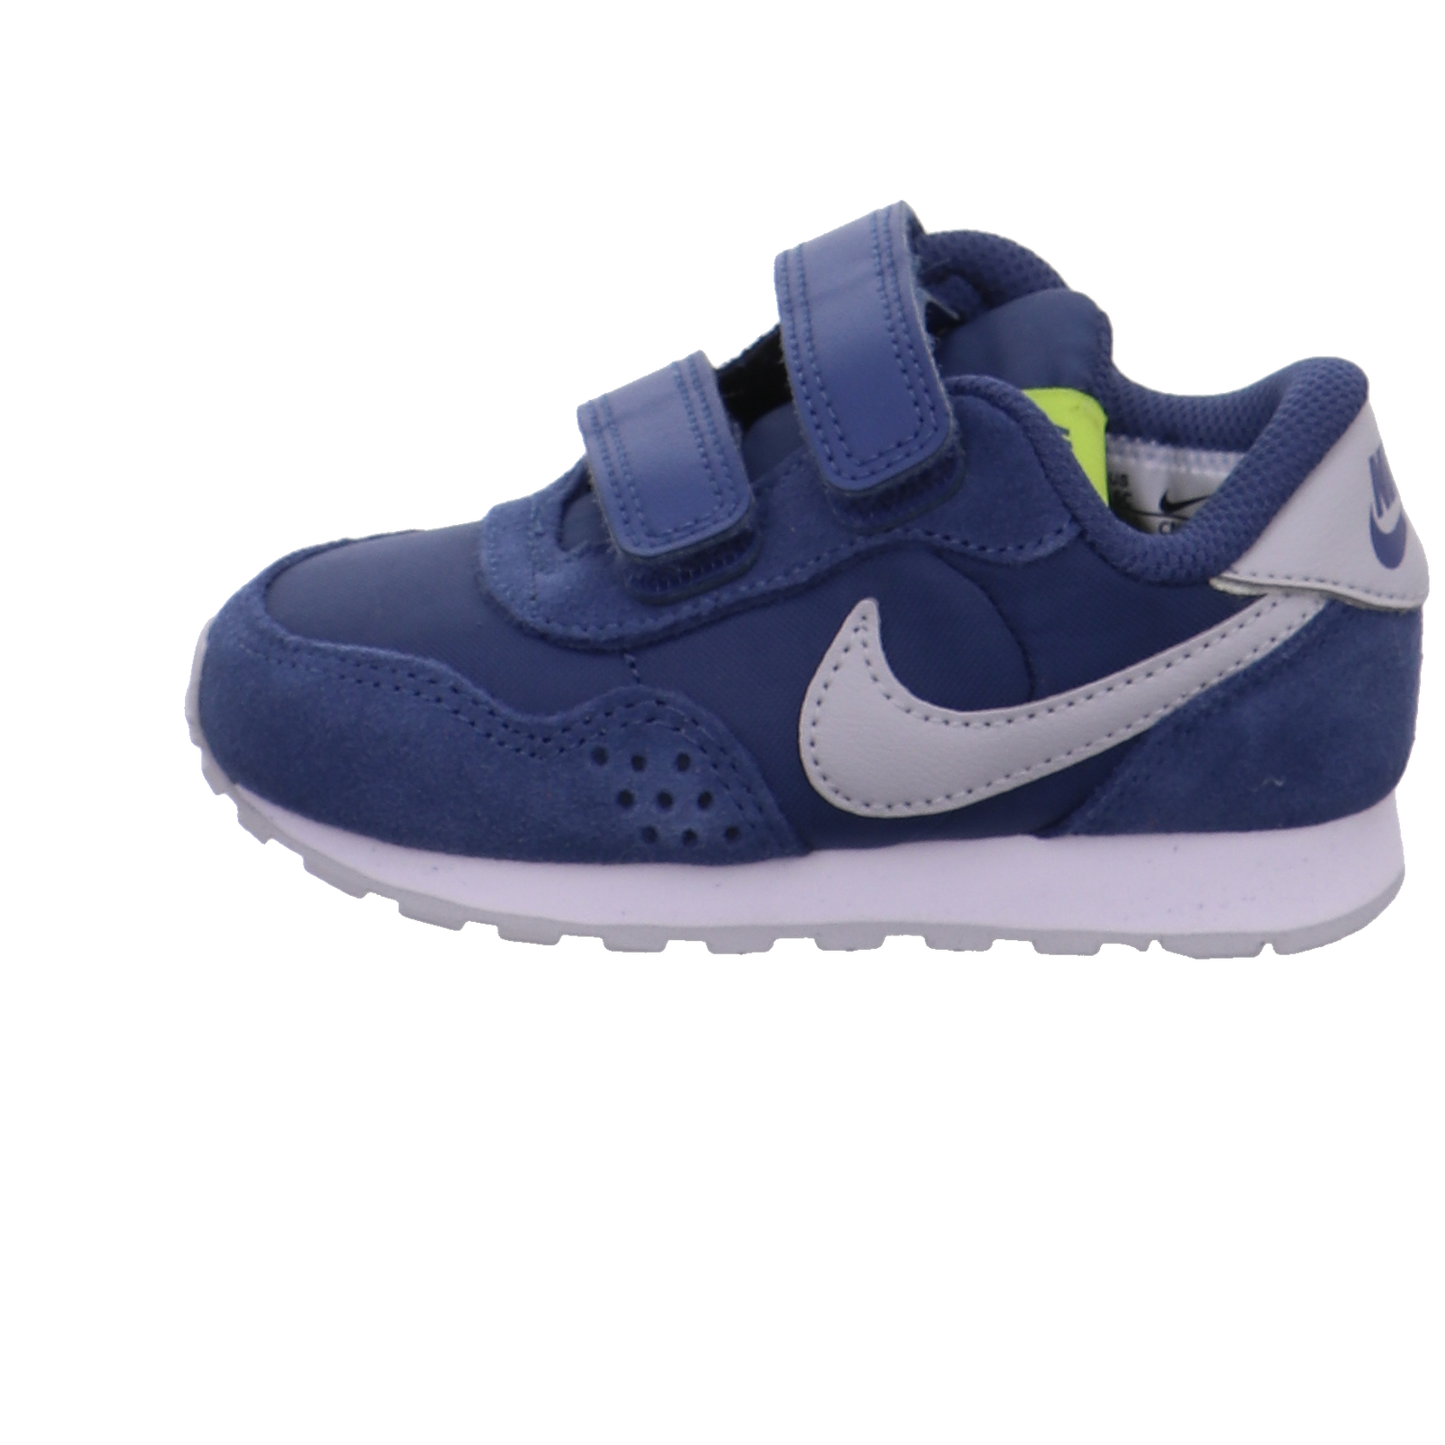 Nike Halbschuhe blau kombi Bild1